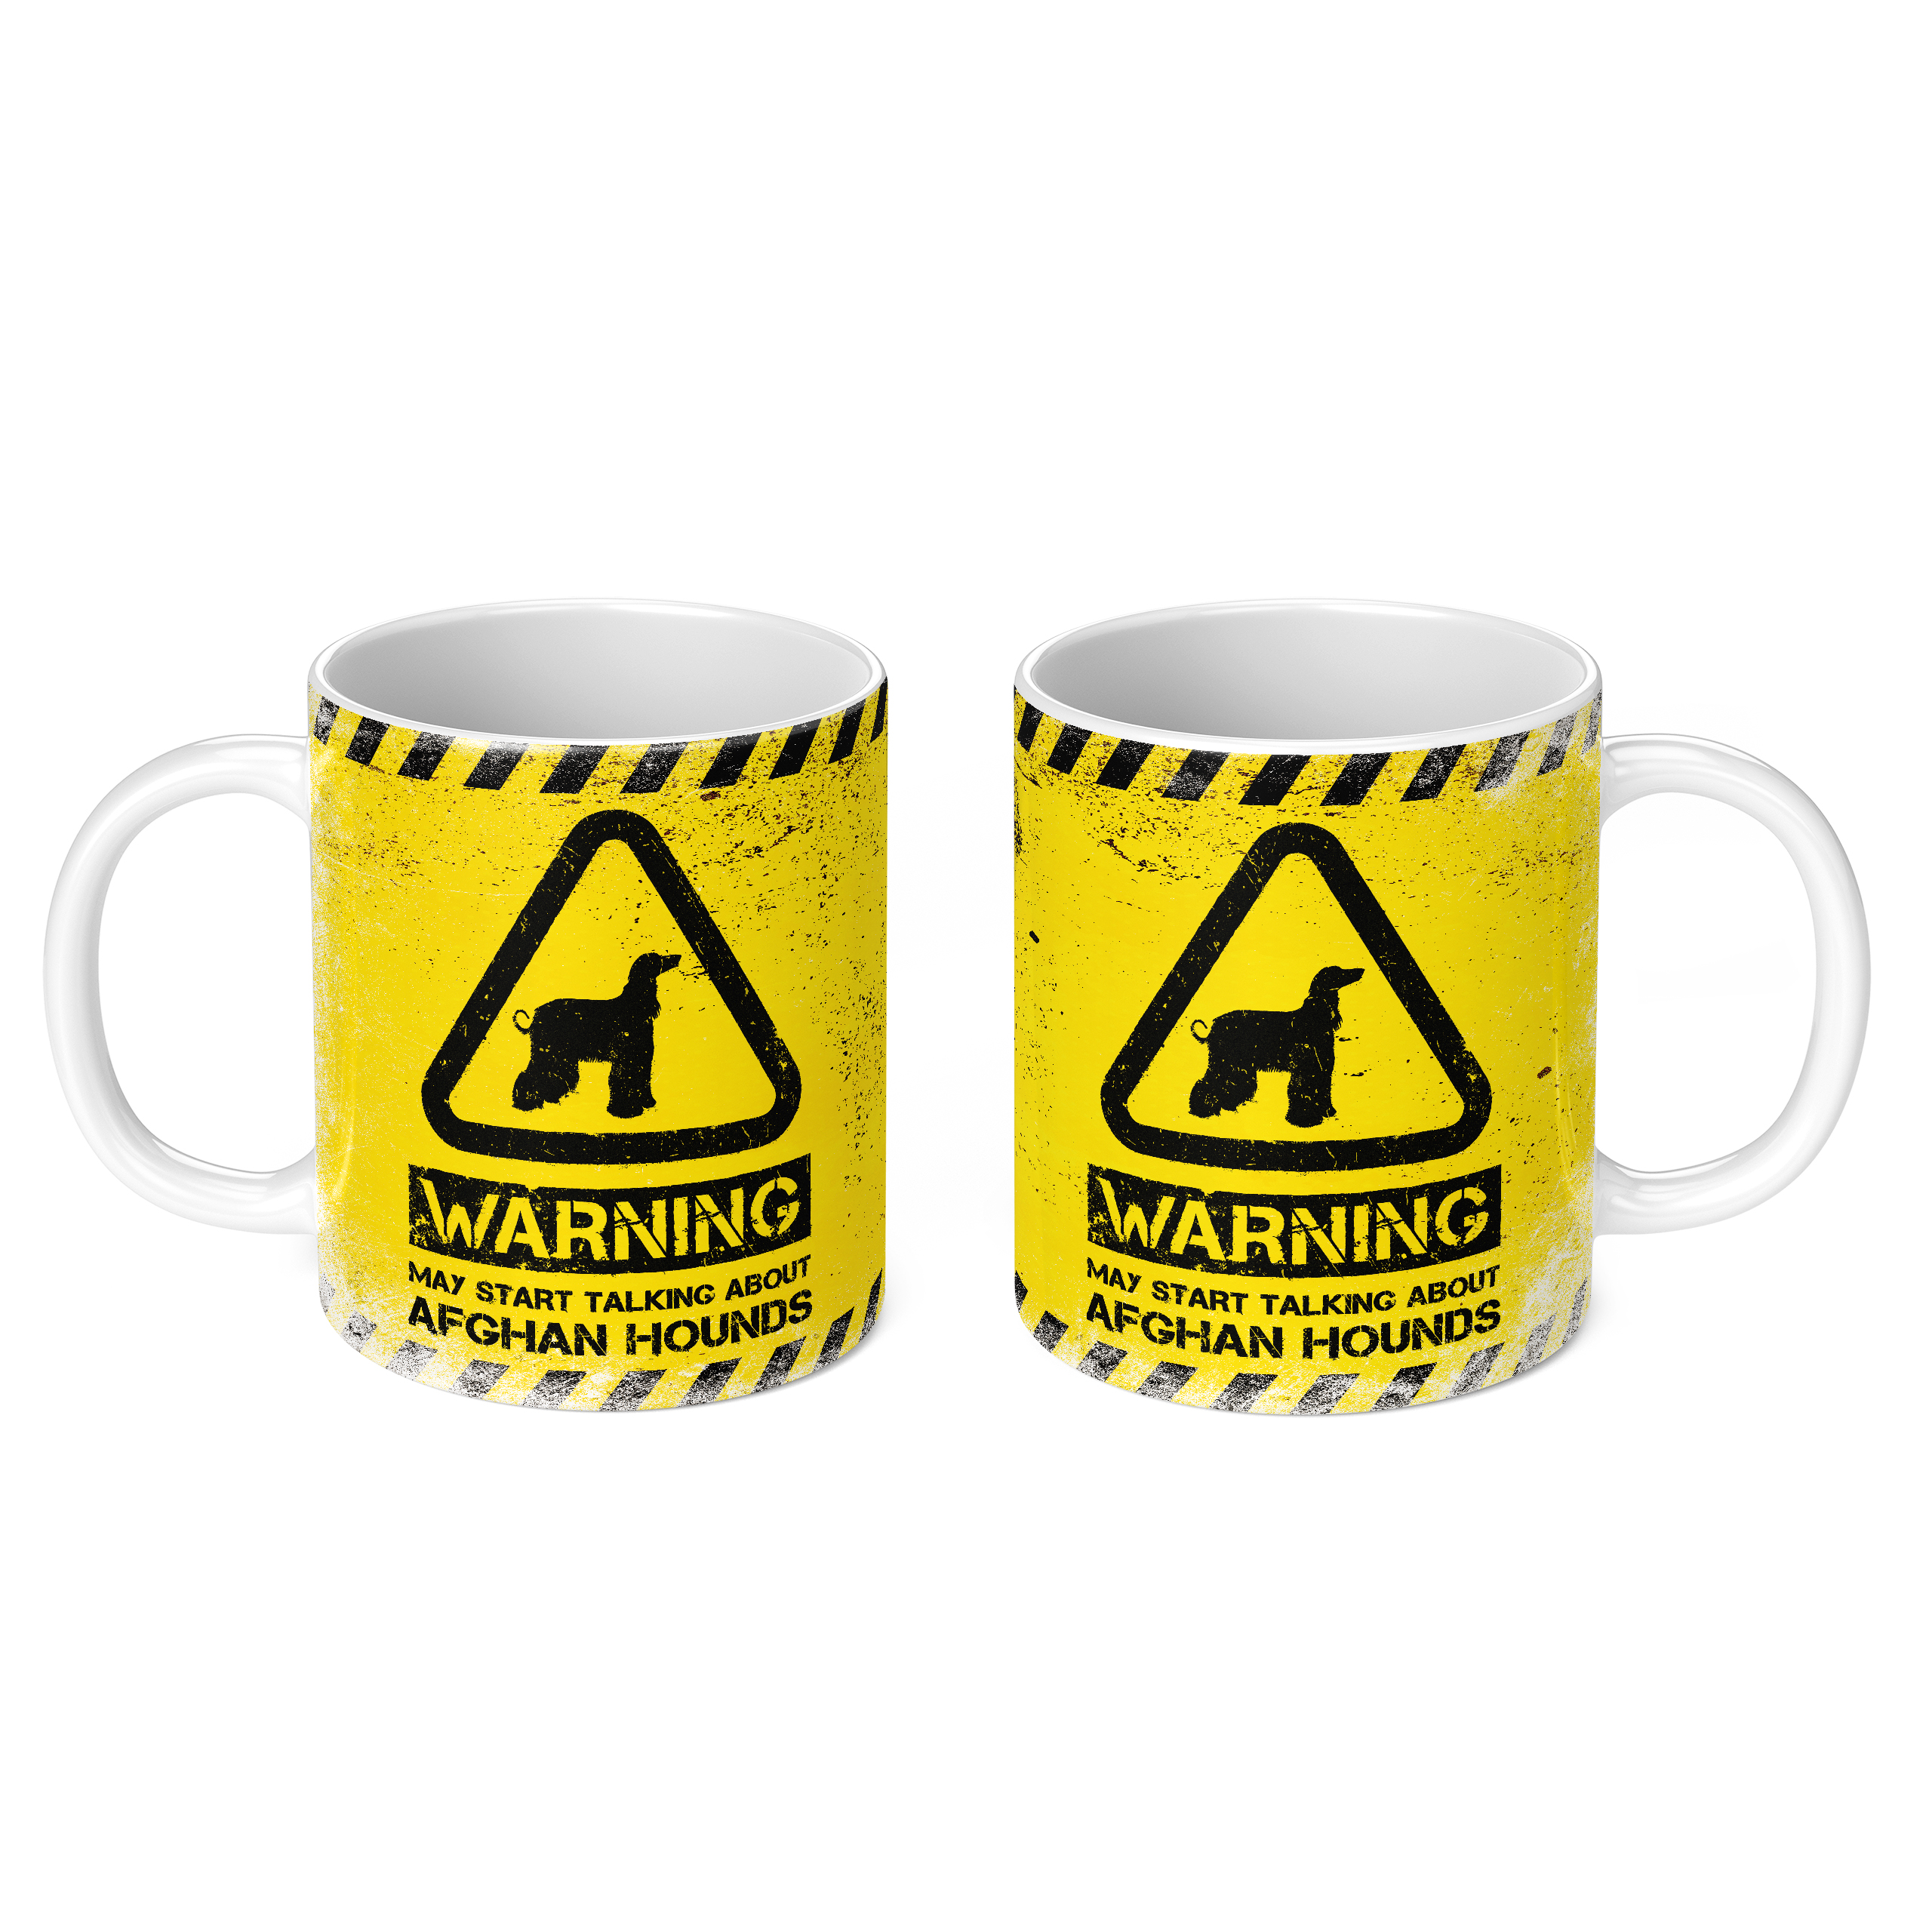 WARNING MAY START TALKING ABOUT AFGHAN HOUNDS 11oz NOVELTY MUG Mugs